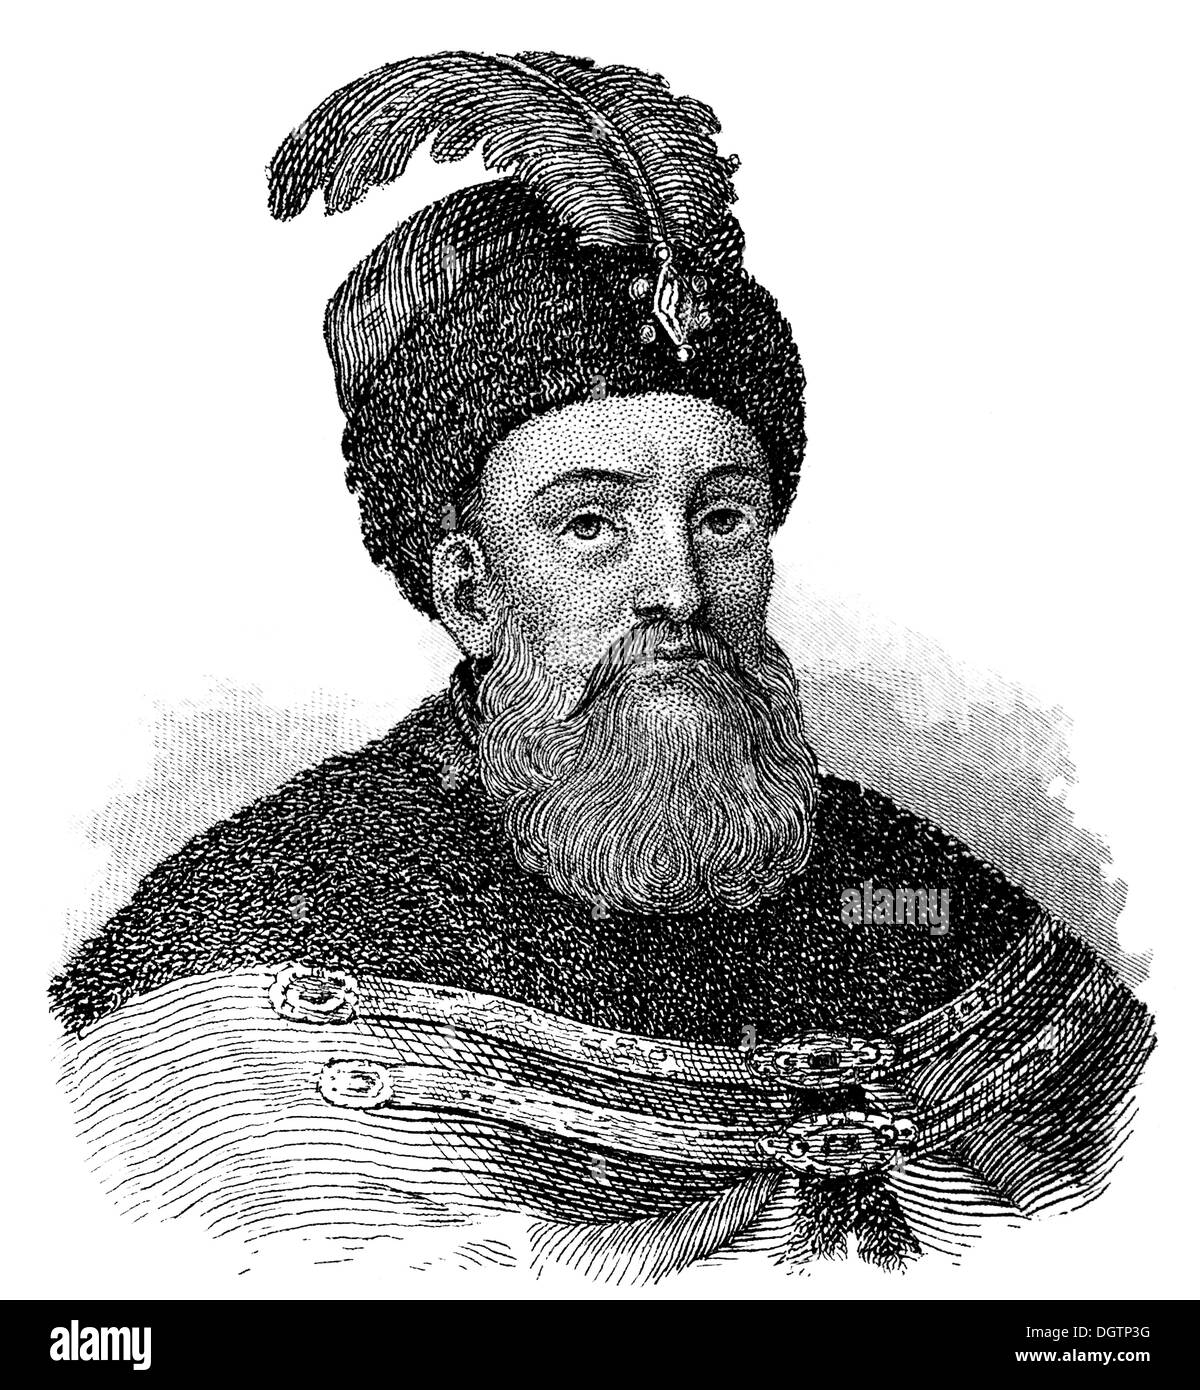 Gabriel Bethlen de Iktár, 1580 - 1629, King of Hungary as Gabriel I, Prince of Transylvania, leader of an anti-Habsburg insurrec Stock Photo